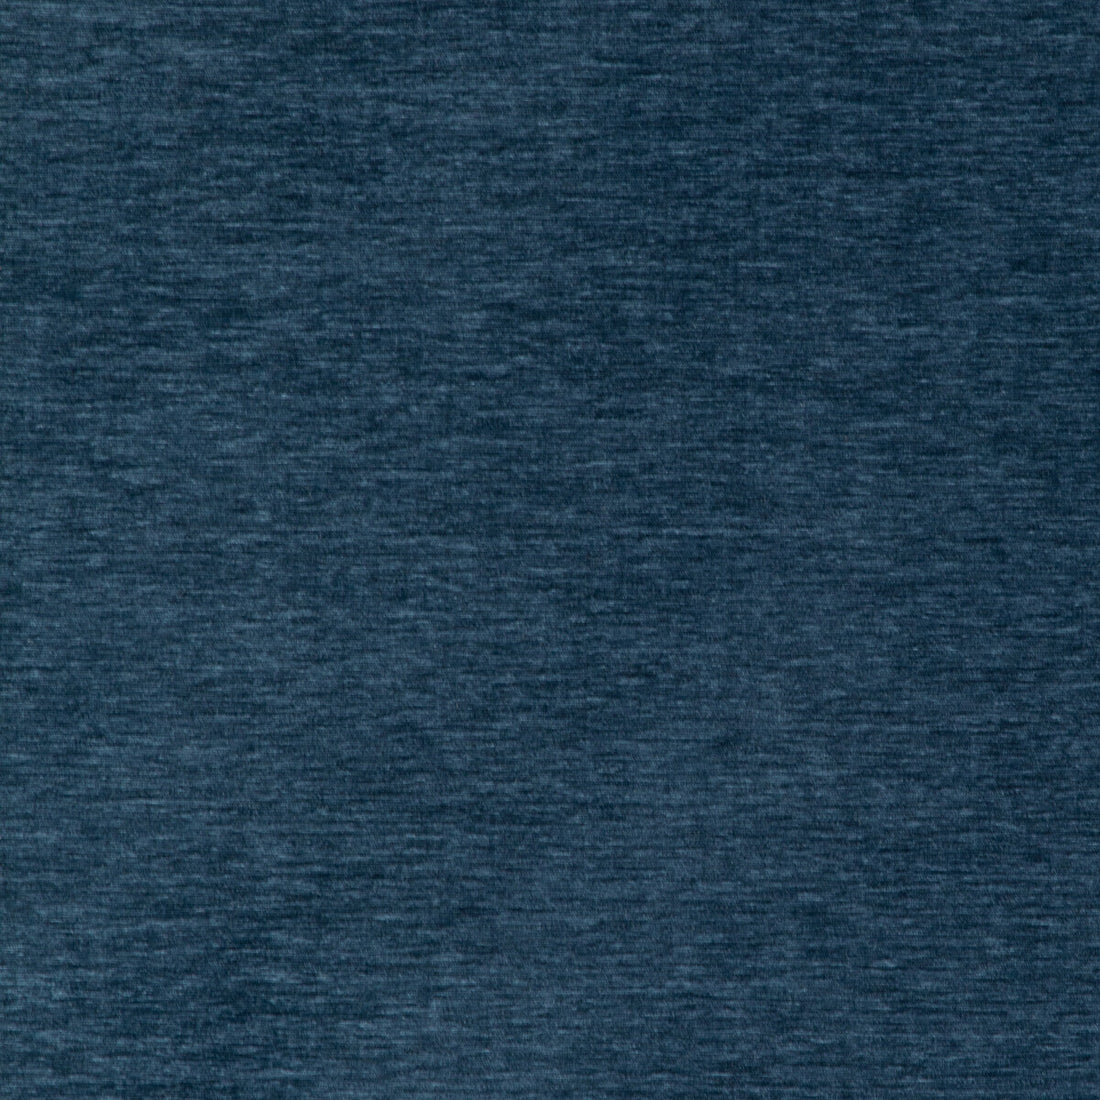 Kravet Smart fabric in 36662-505 color - pattern 36662.505.0 - by Kravet Smart in the Performance Kravetarmor collection